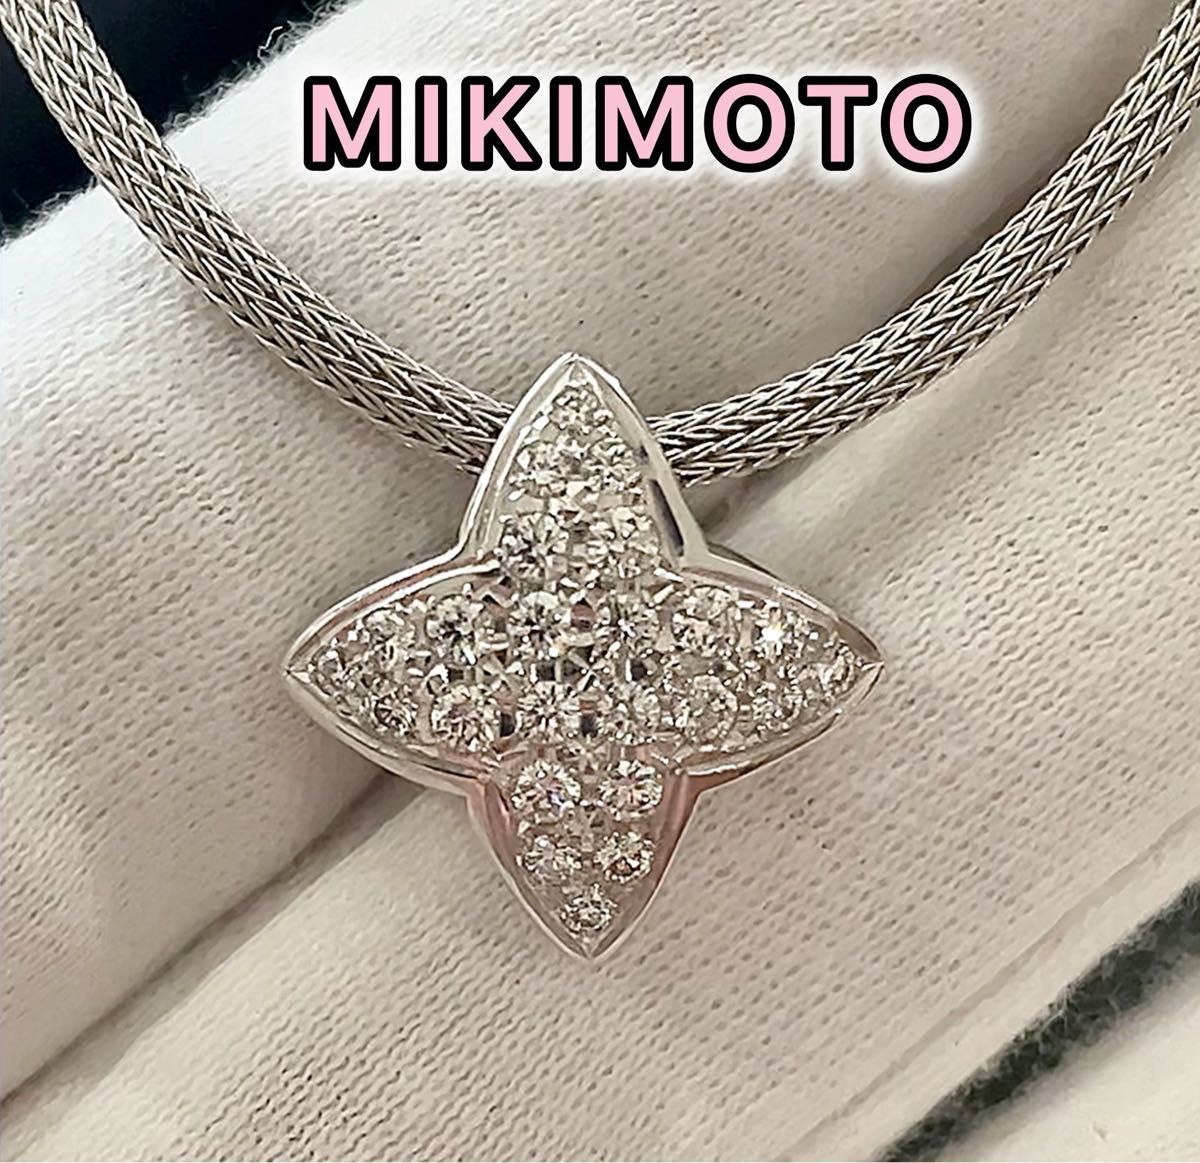 MIKIMOTO【極美品】定価55万円 k18WG 天然ダイヤモンド0.53ct ネックレス 検索:ミキモト18金 リング 指輪